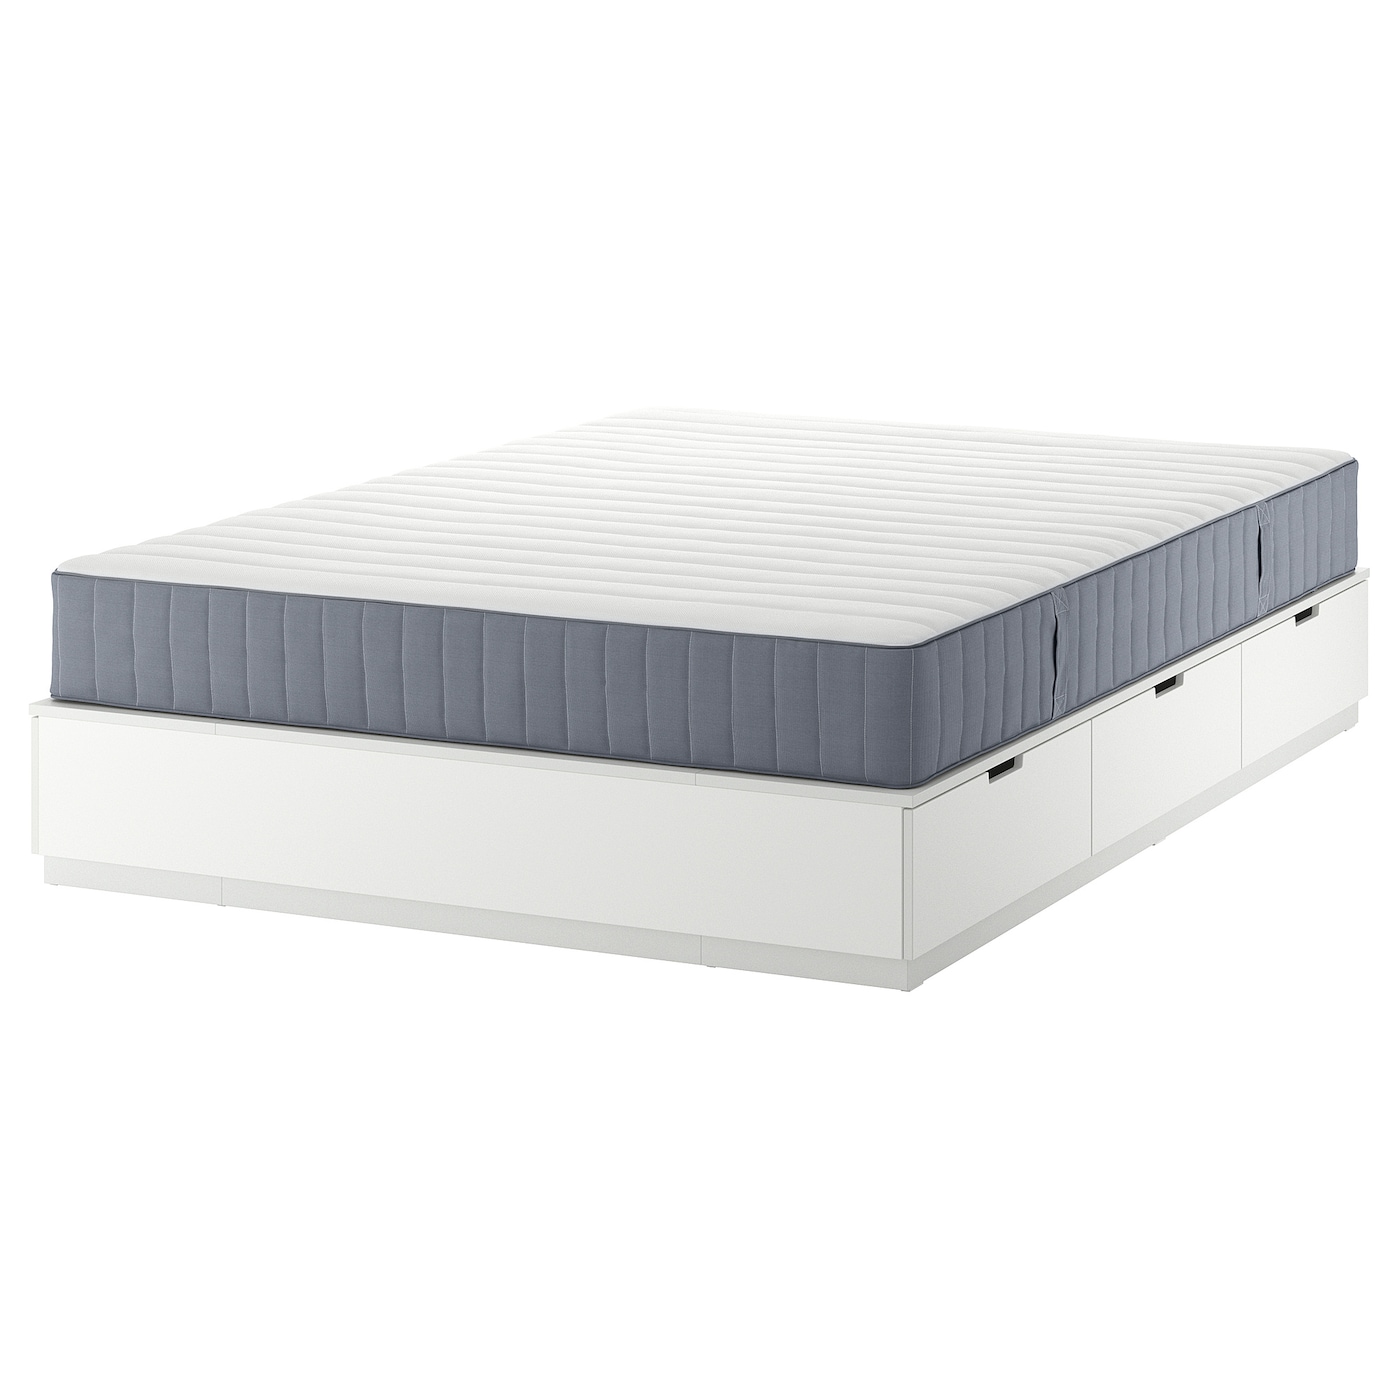 Каркас кровати с ящиком и матрасом - IKEA NORDLI, 200х160 см, матрас средне-жесткий, белый, НОРДЛИ ИКЕА